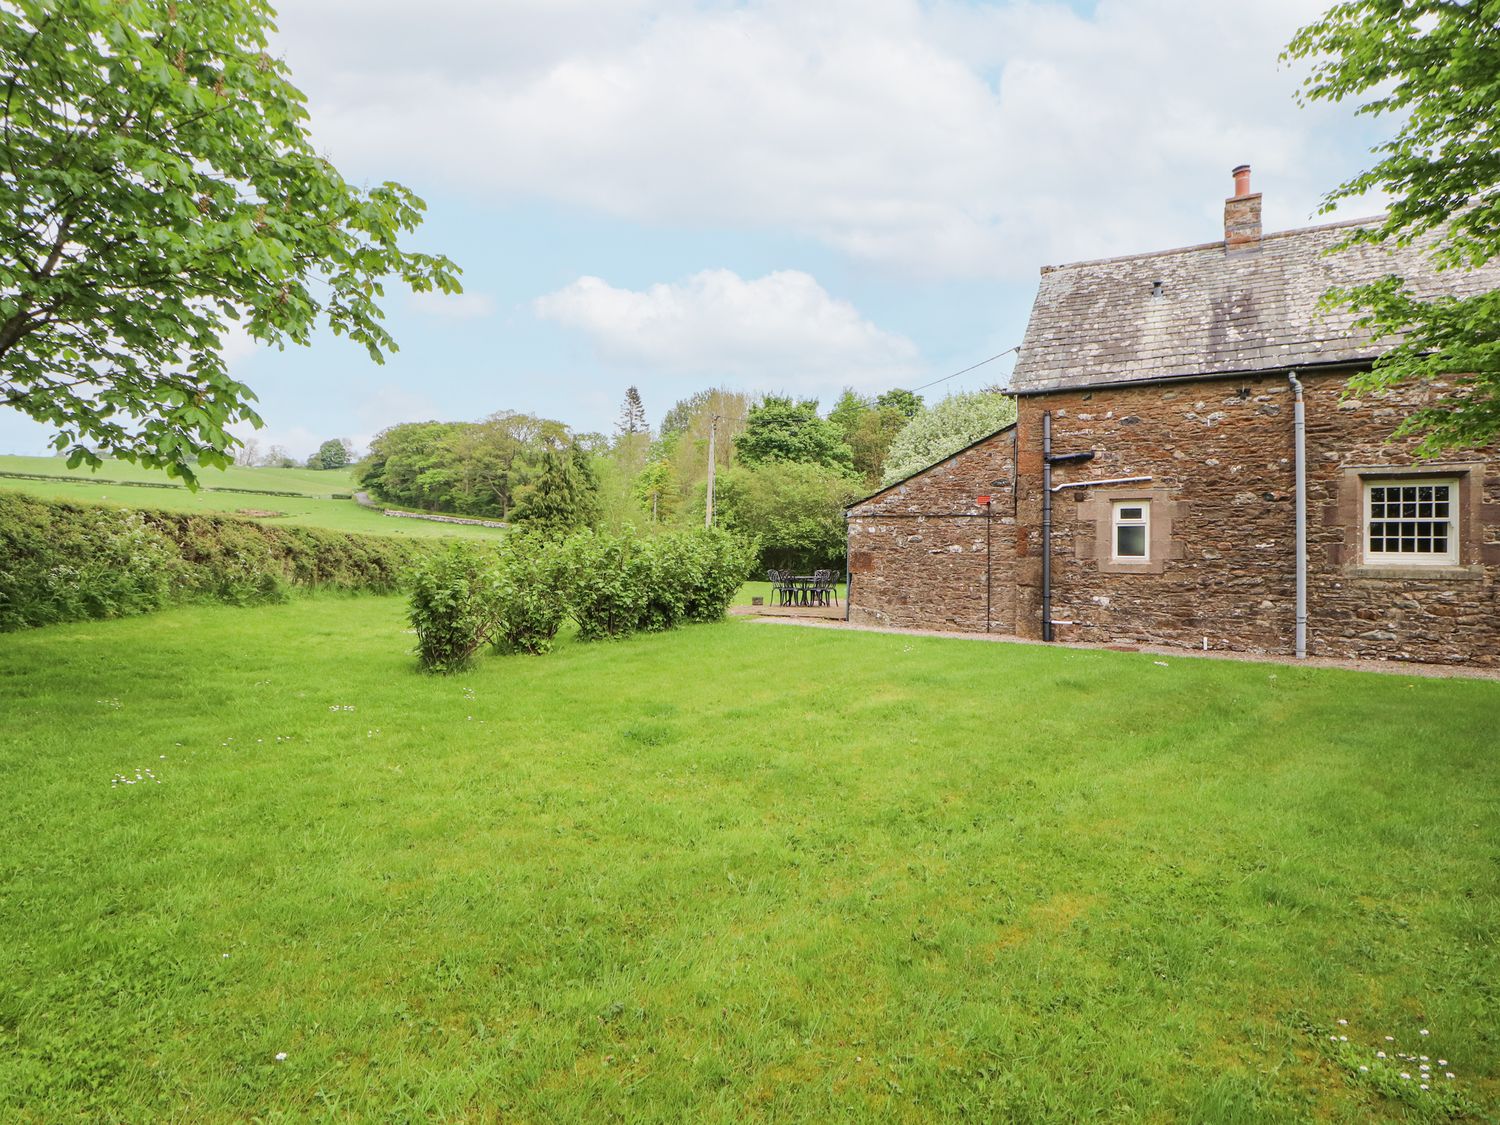 Home Farm House, Penrith, Cumbria